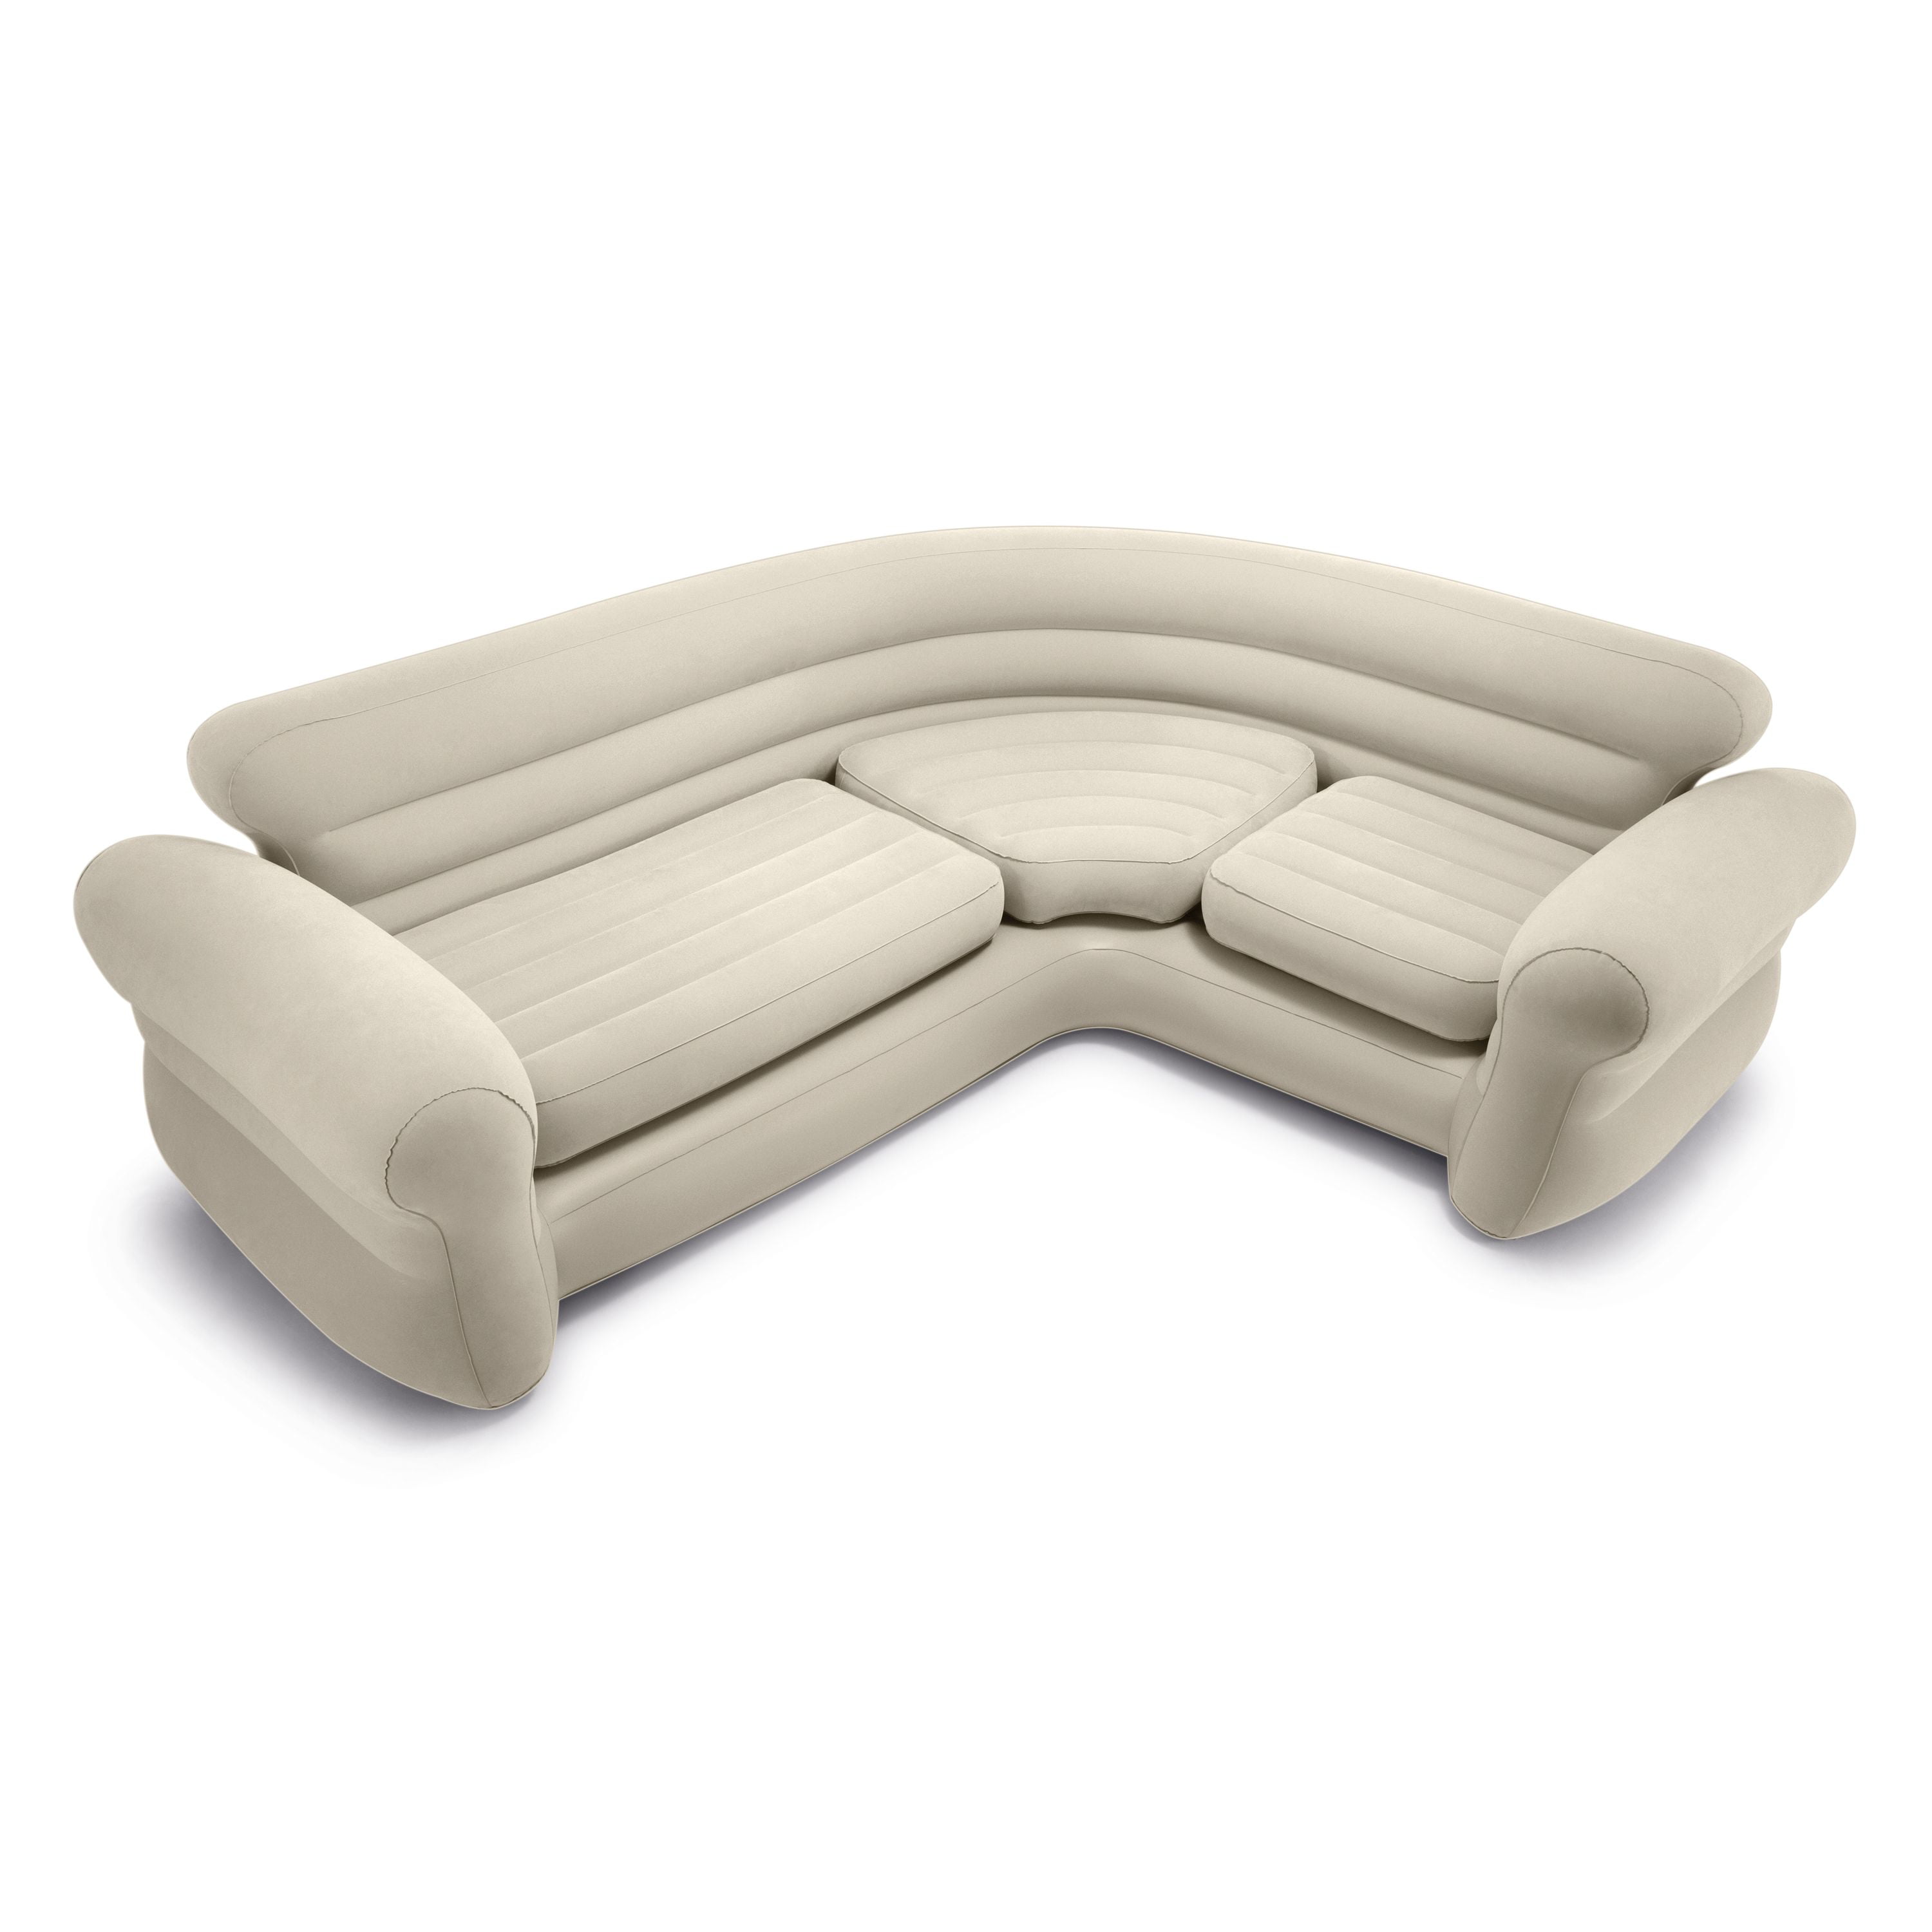 BearSOFA Inflatable Lounger Air Sofa Bed Portable